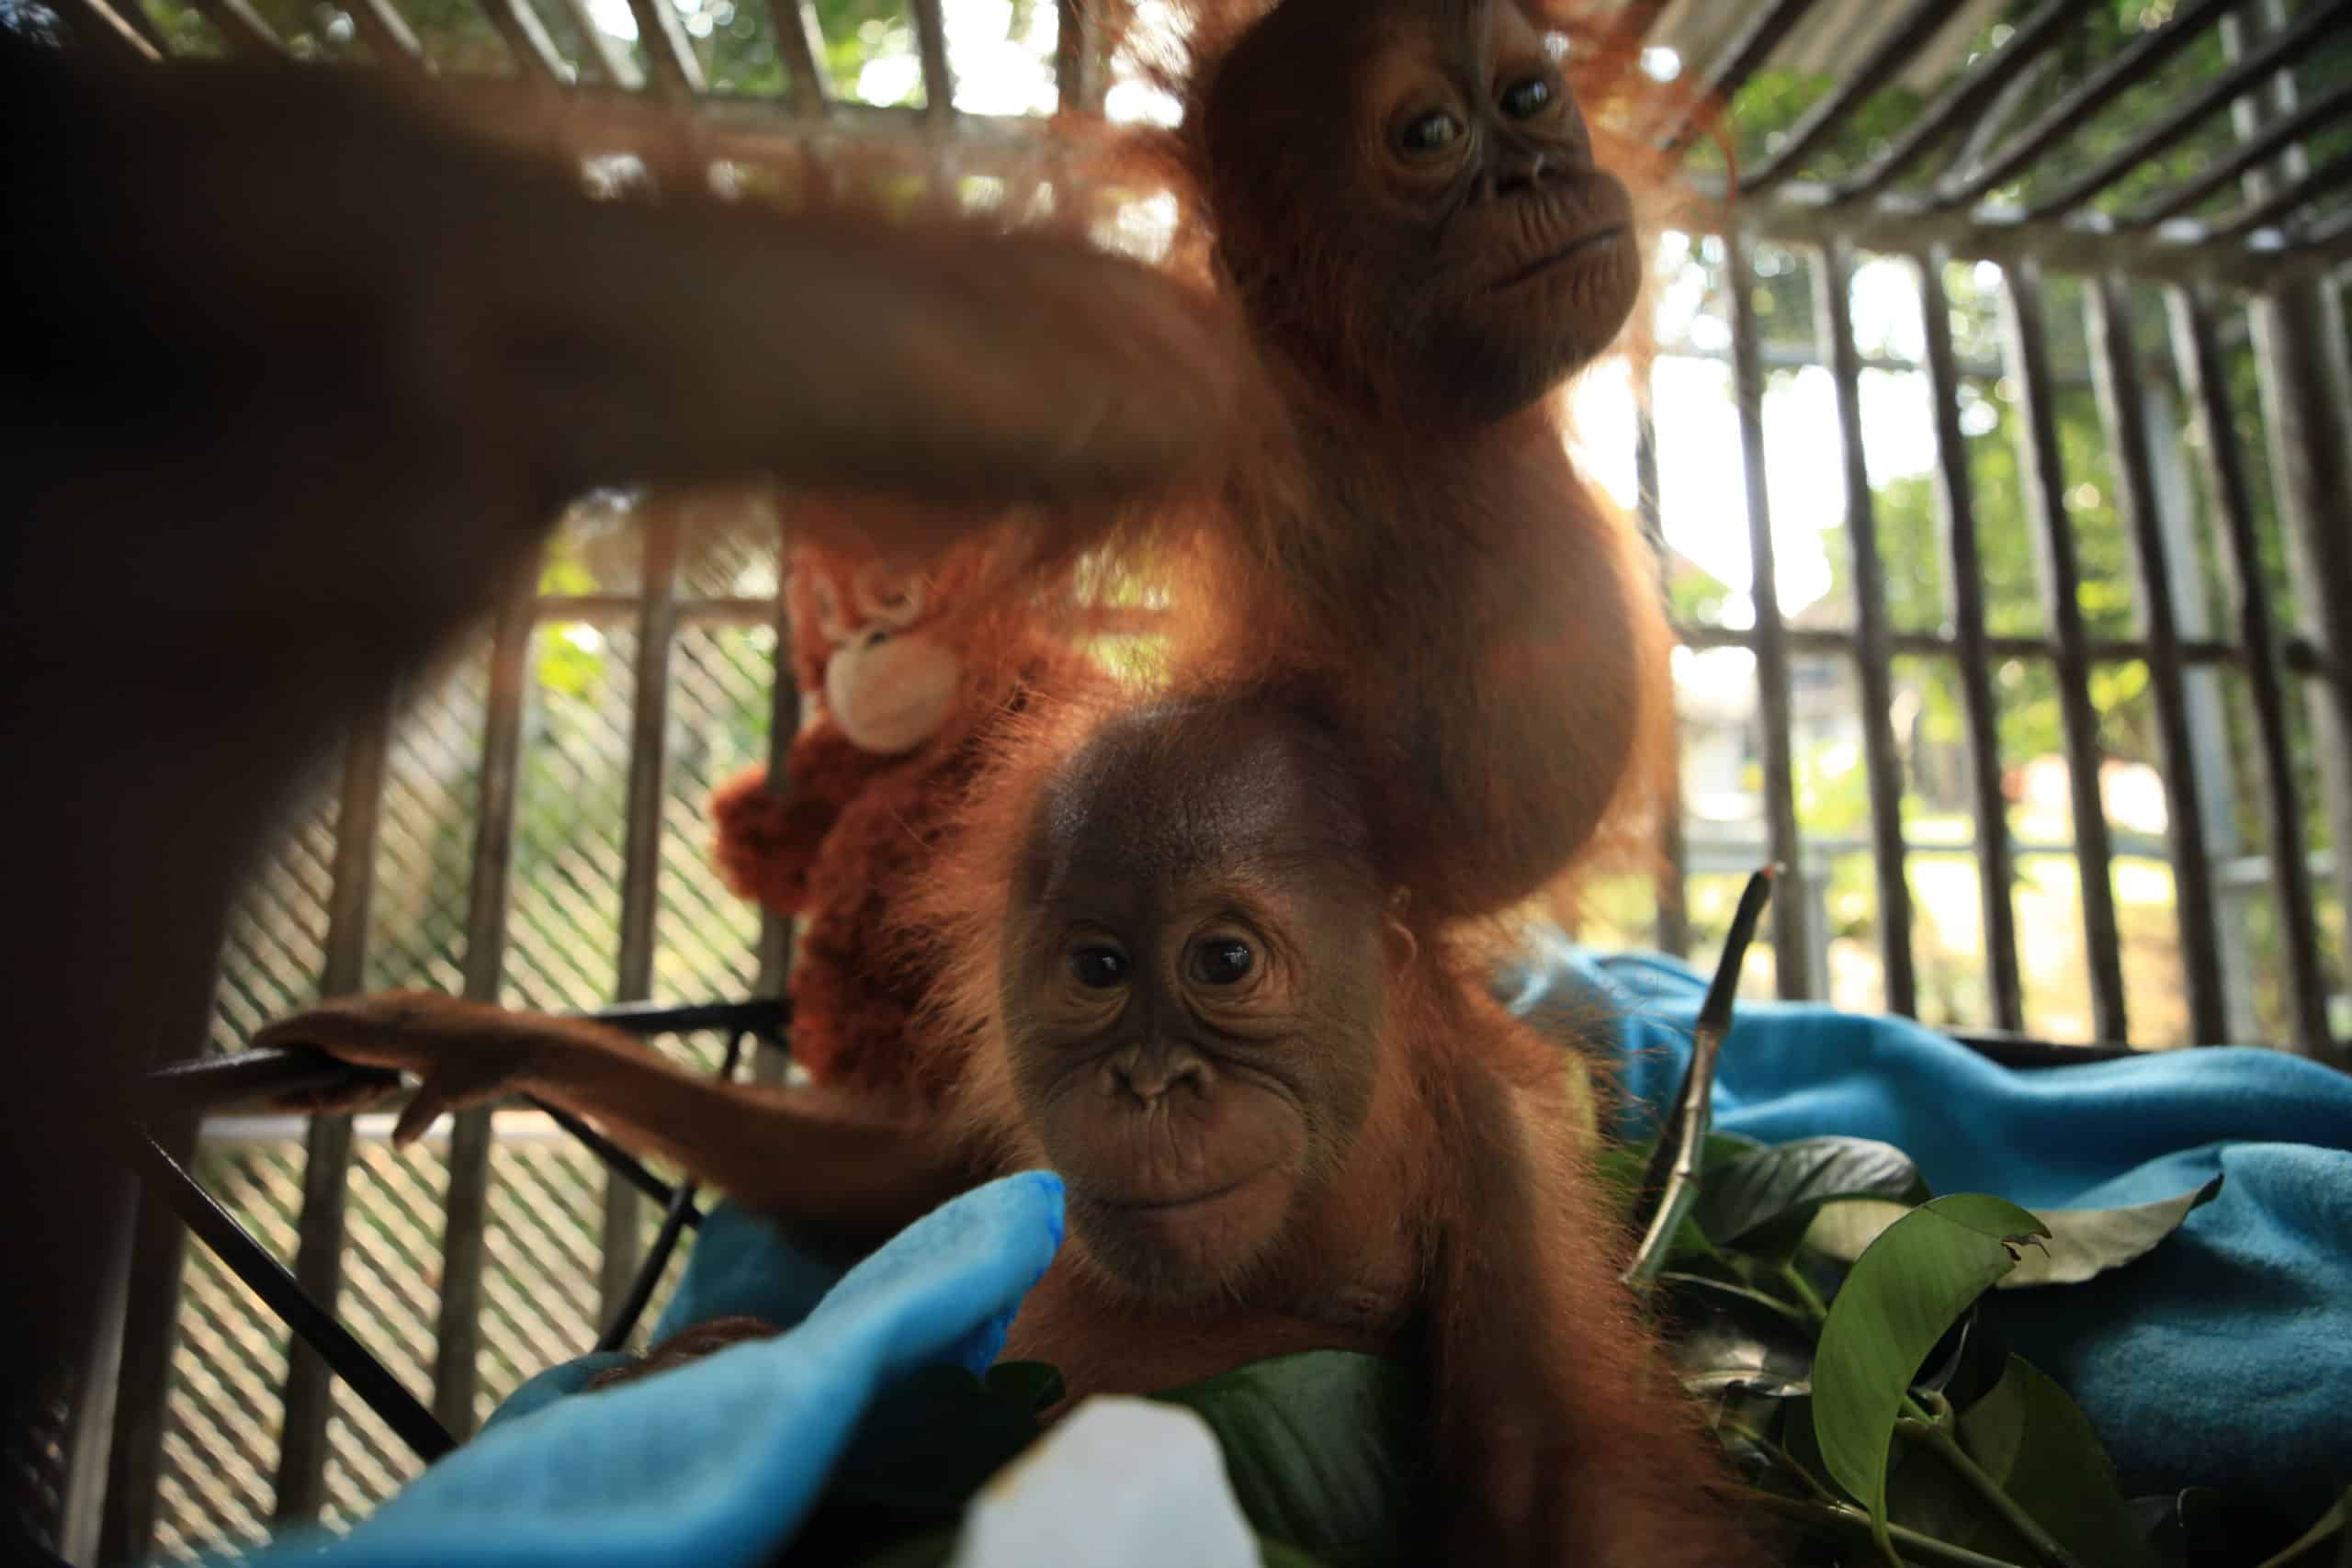 orangutan caring week